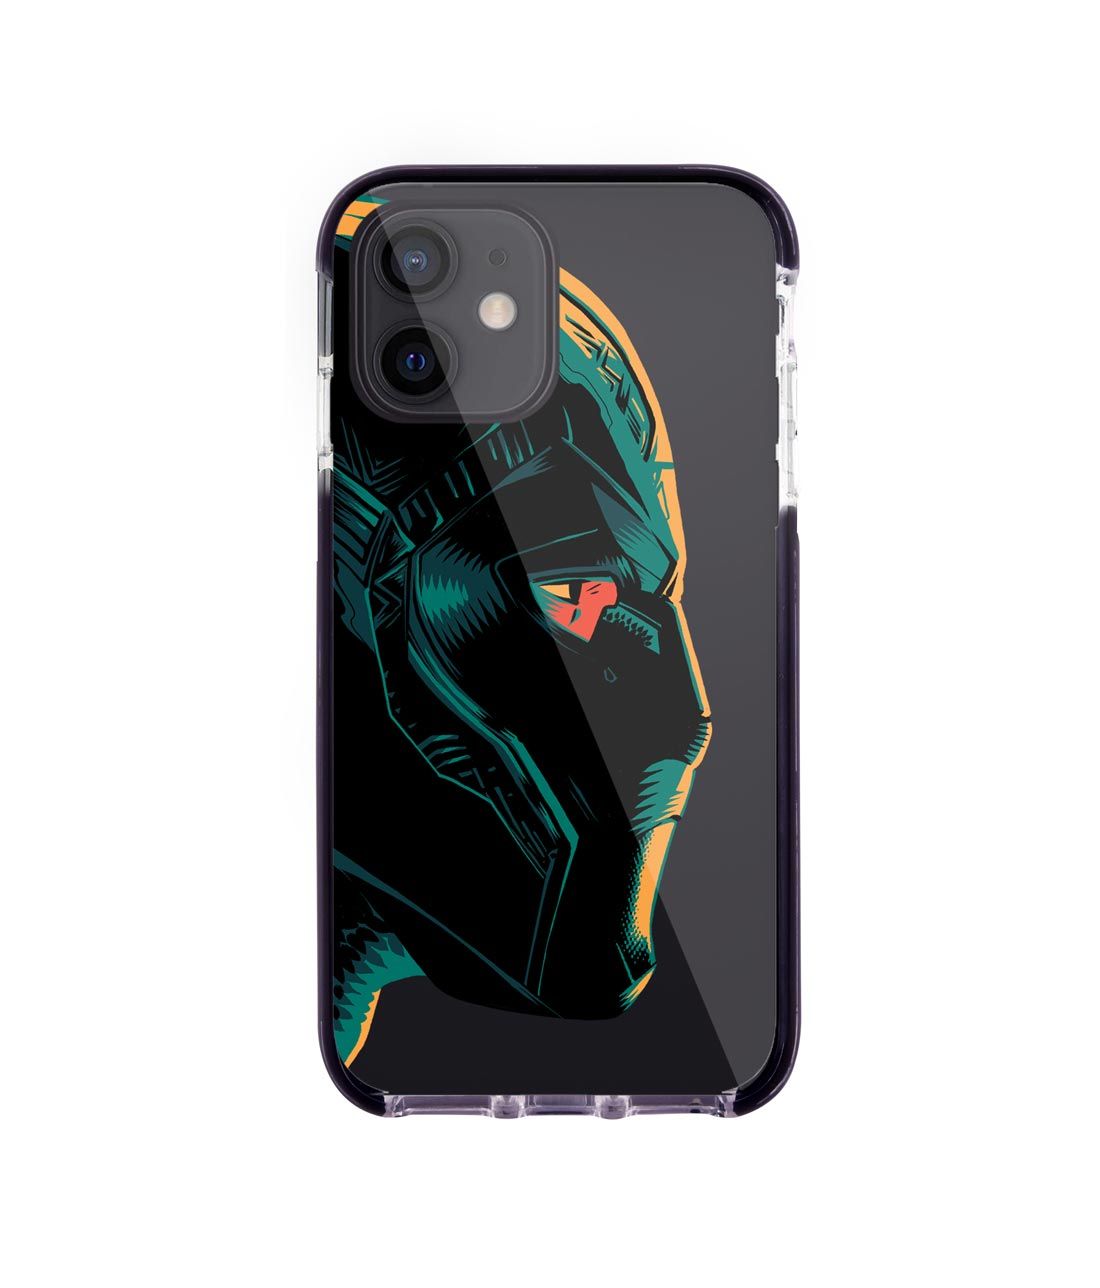 Illuminated Black Panther - Extreme Case for iPhone 12 Mini